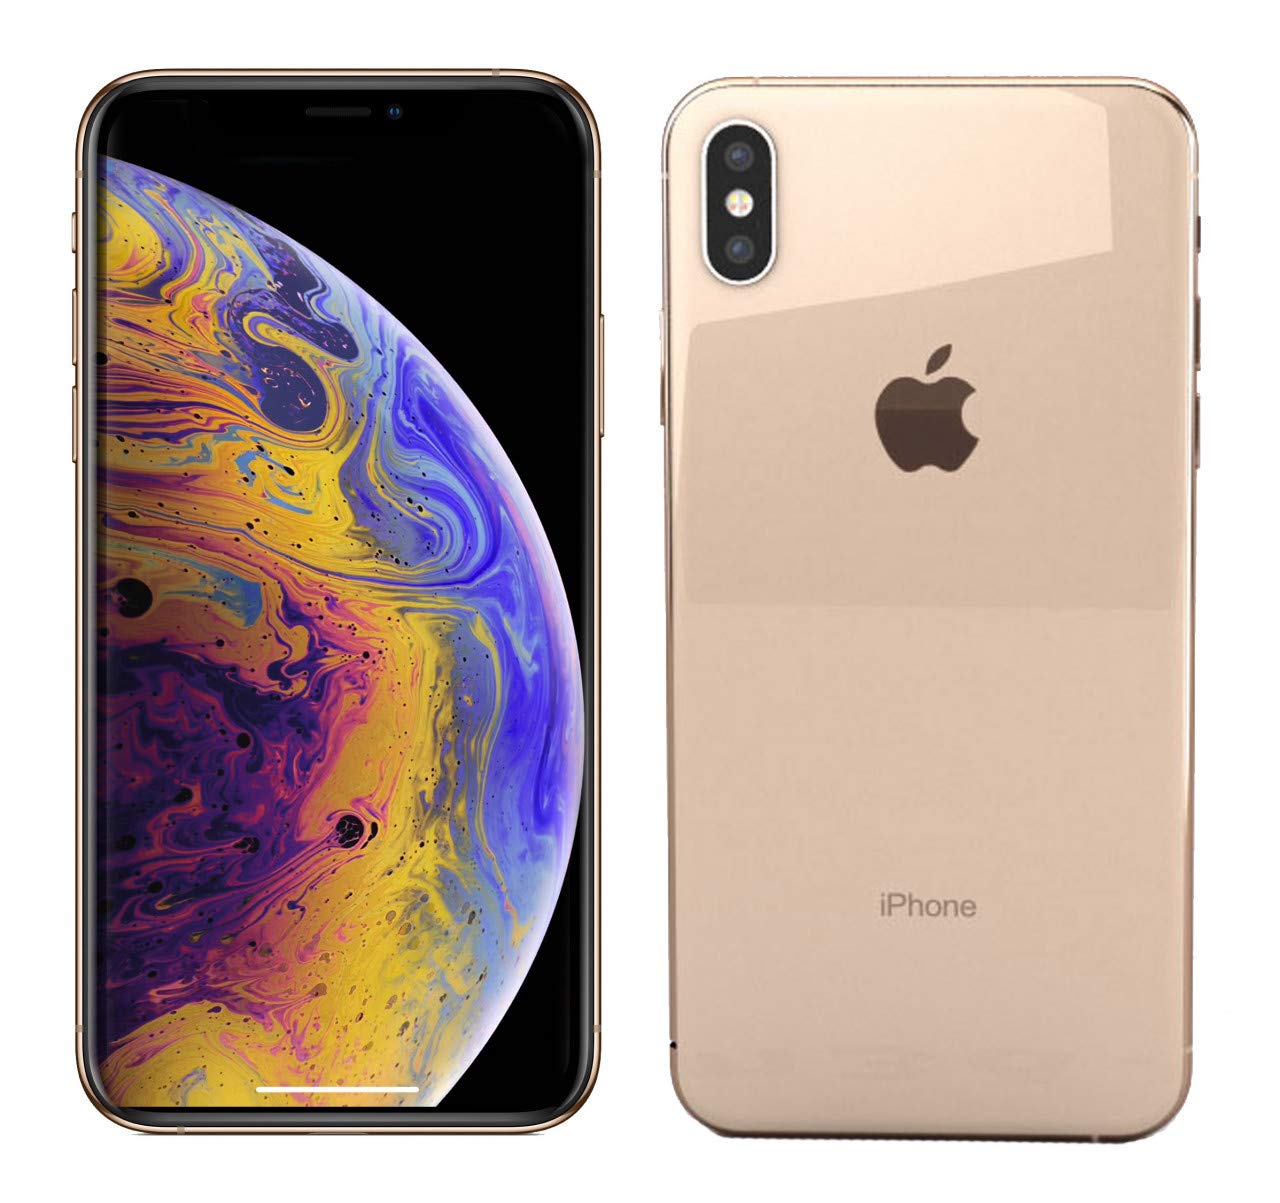 Apple iPhone XS Price in Pakistan - Price Updated Nov 2020